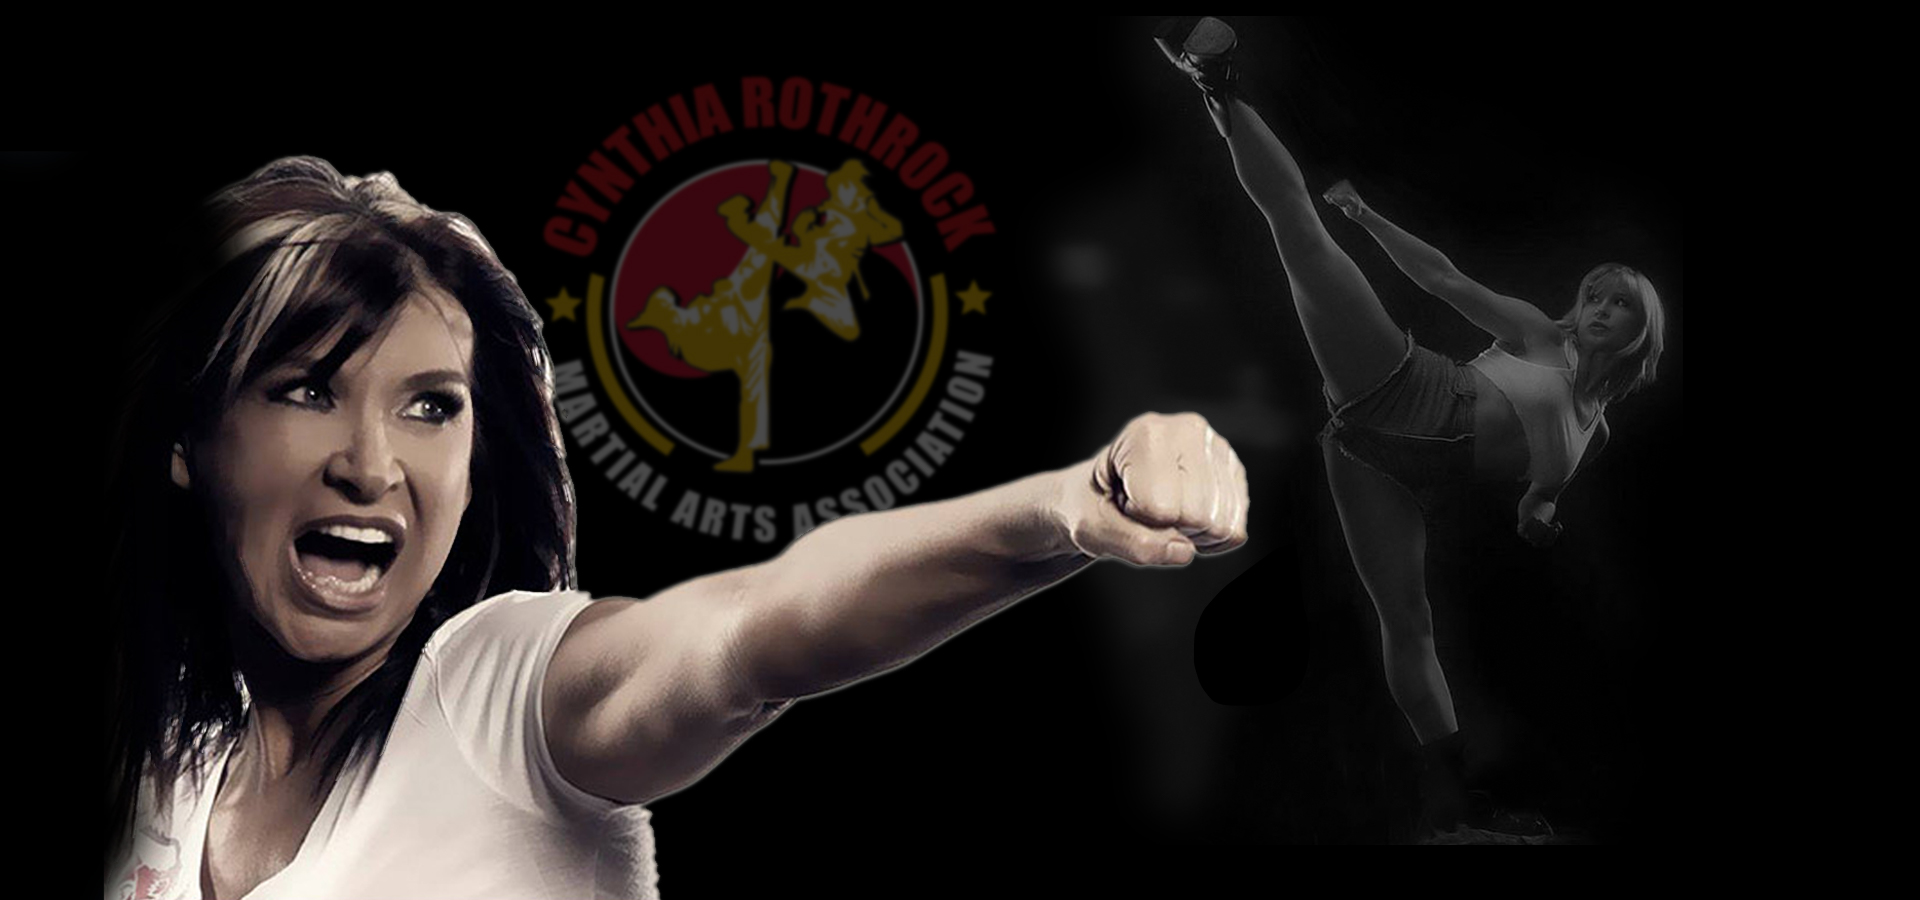 Cynthia Rothrock's exclusive Martial Arts Association